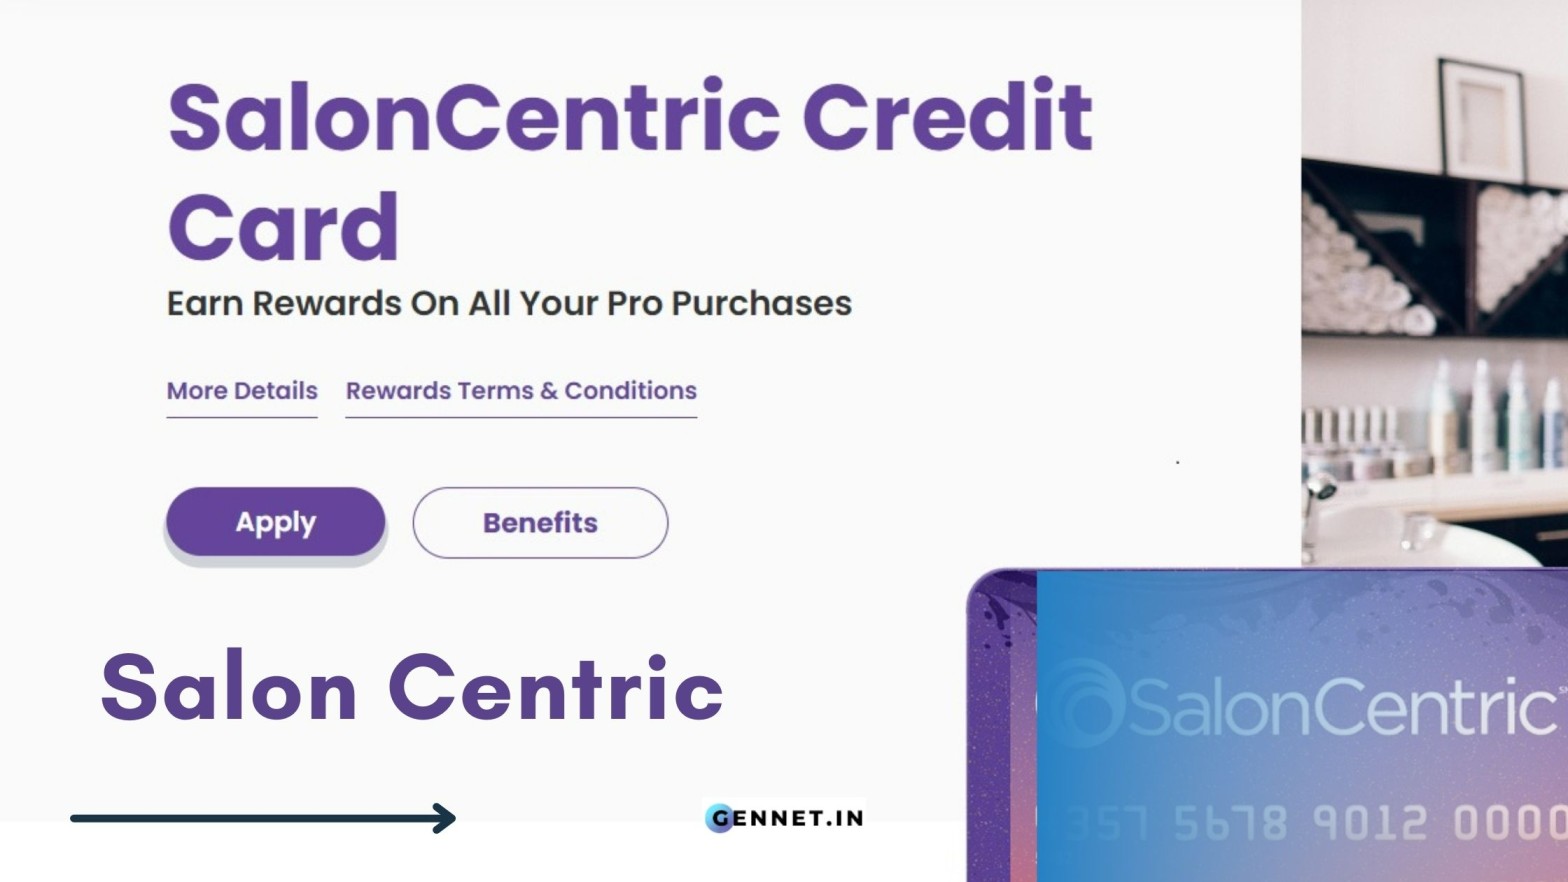 Salon Centric Credit Card Login, Payment & Account Setup Details